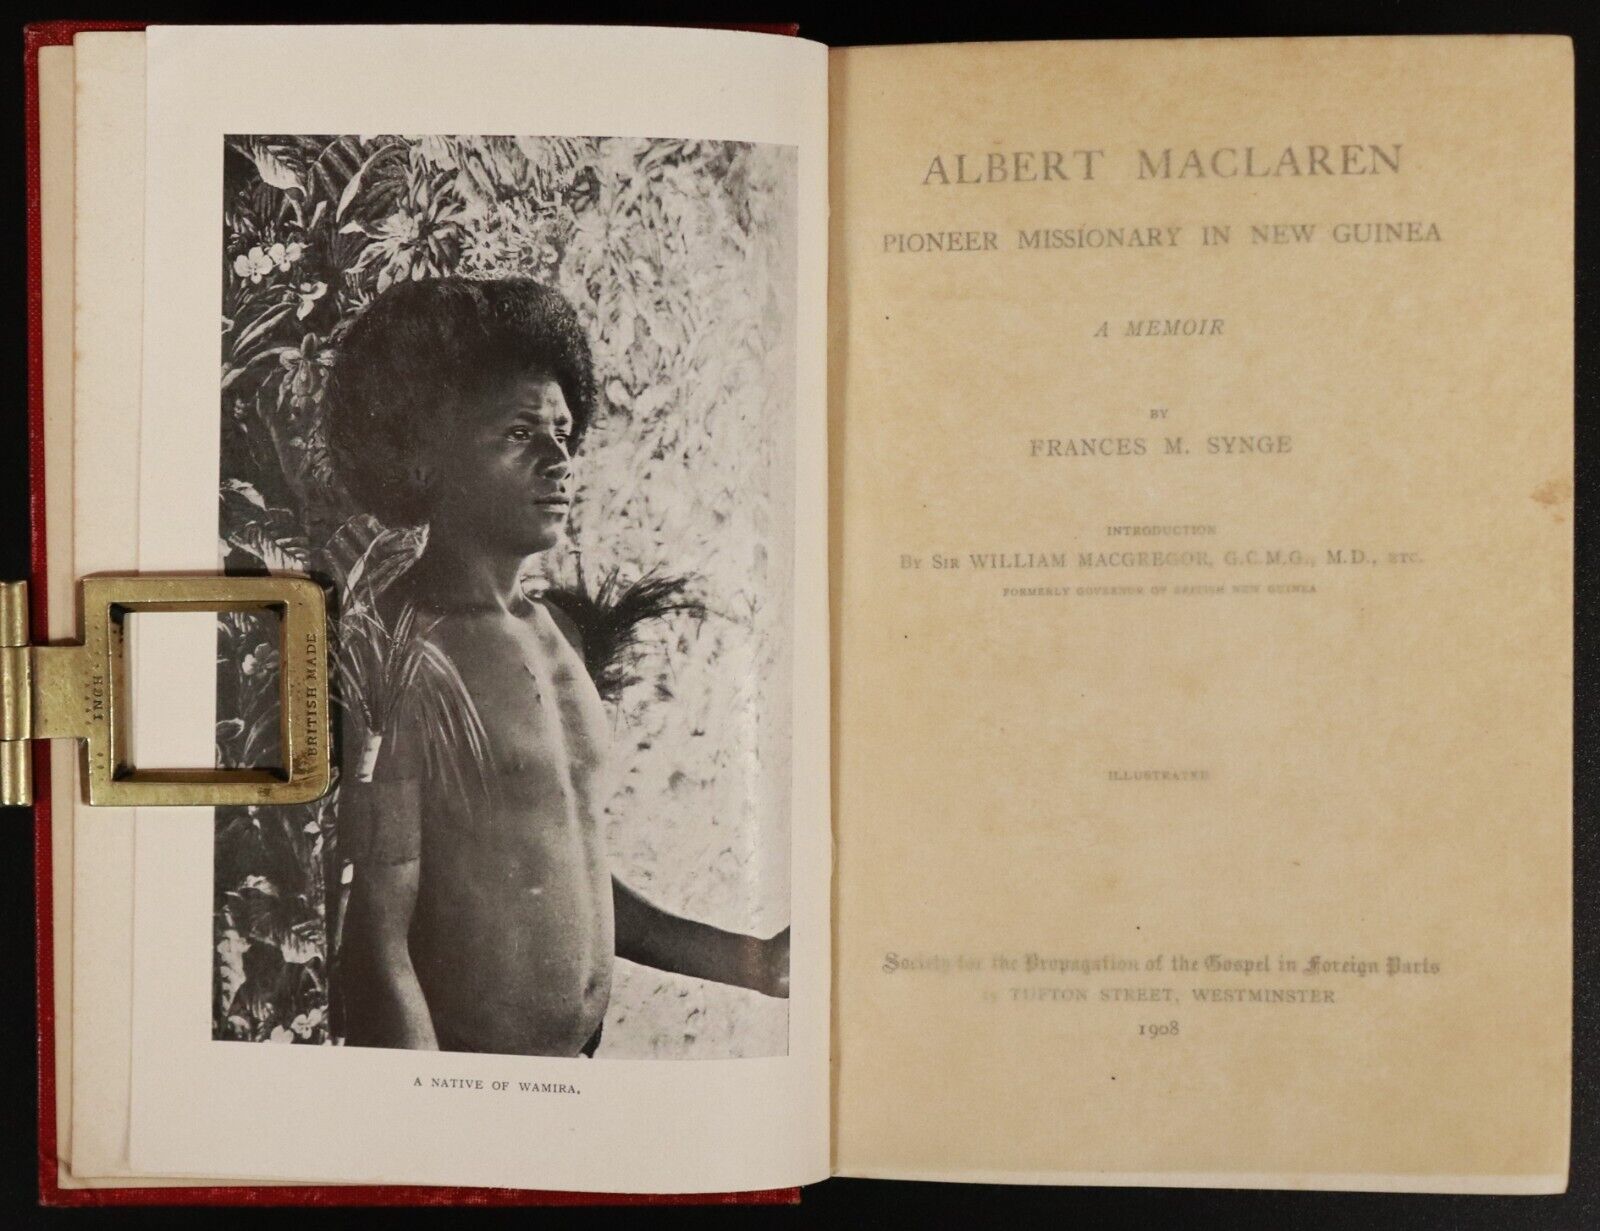 1908 Albert Maclaren Missionary In New Guinea F.M. Synge Australian History Book - 0